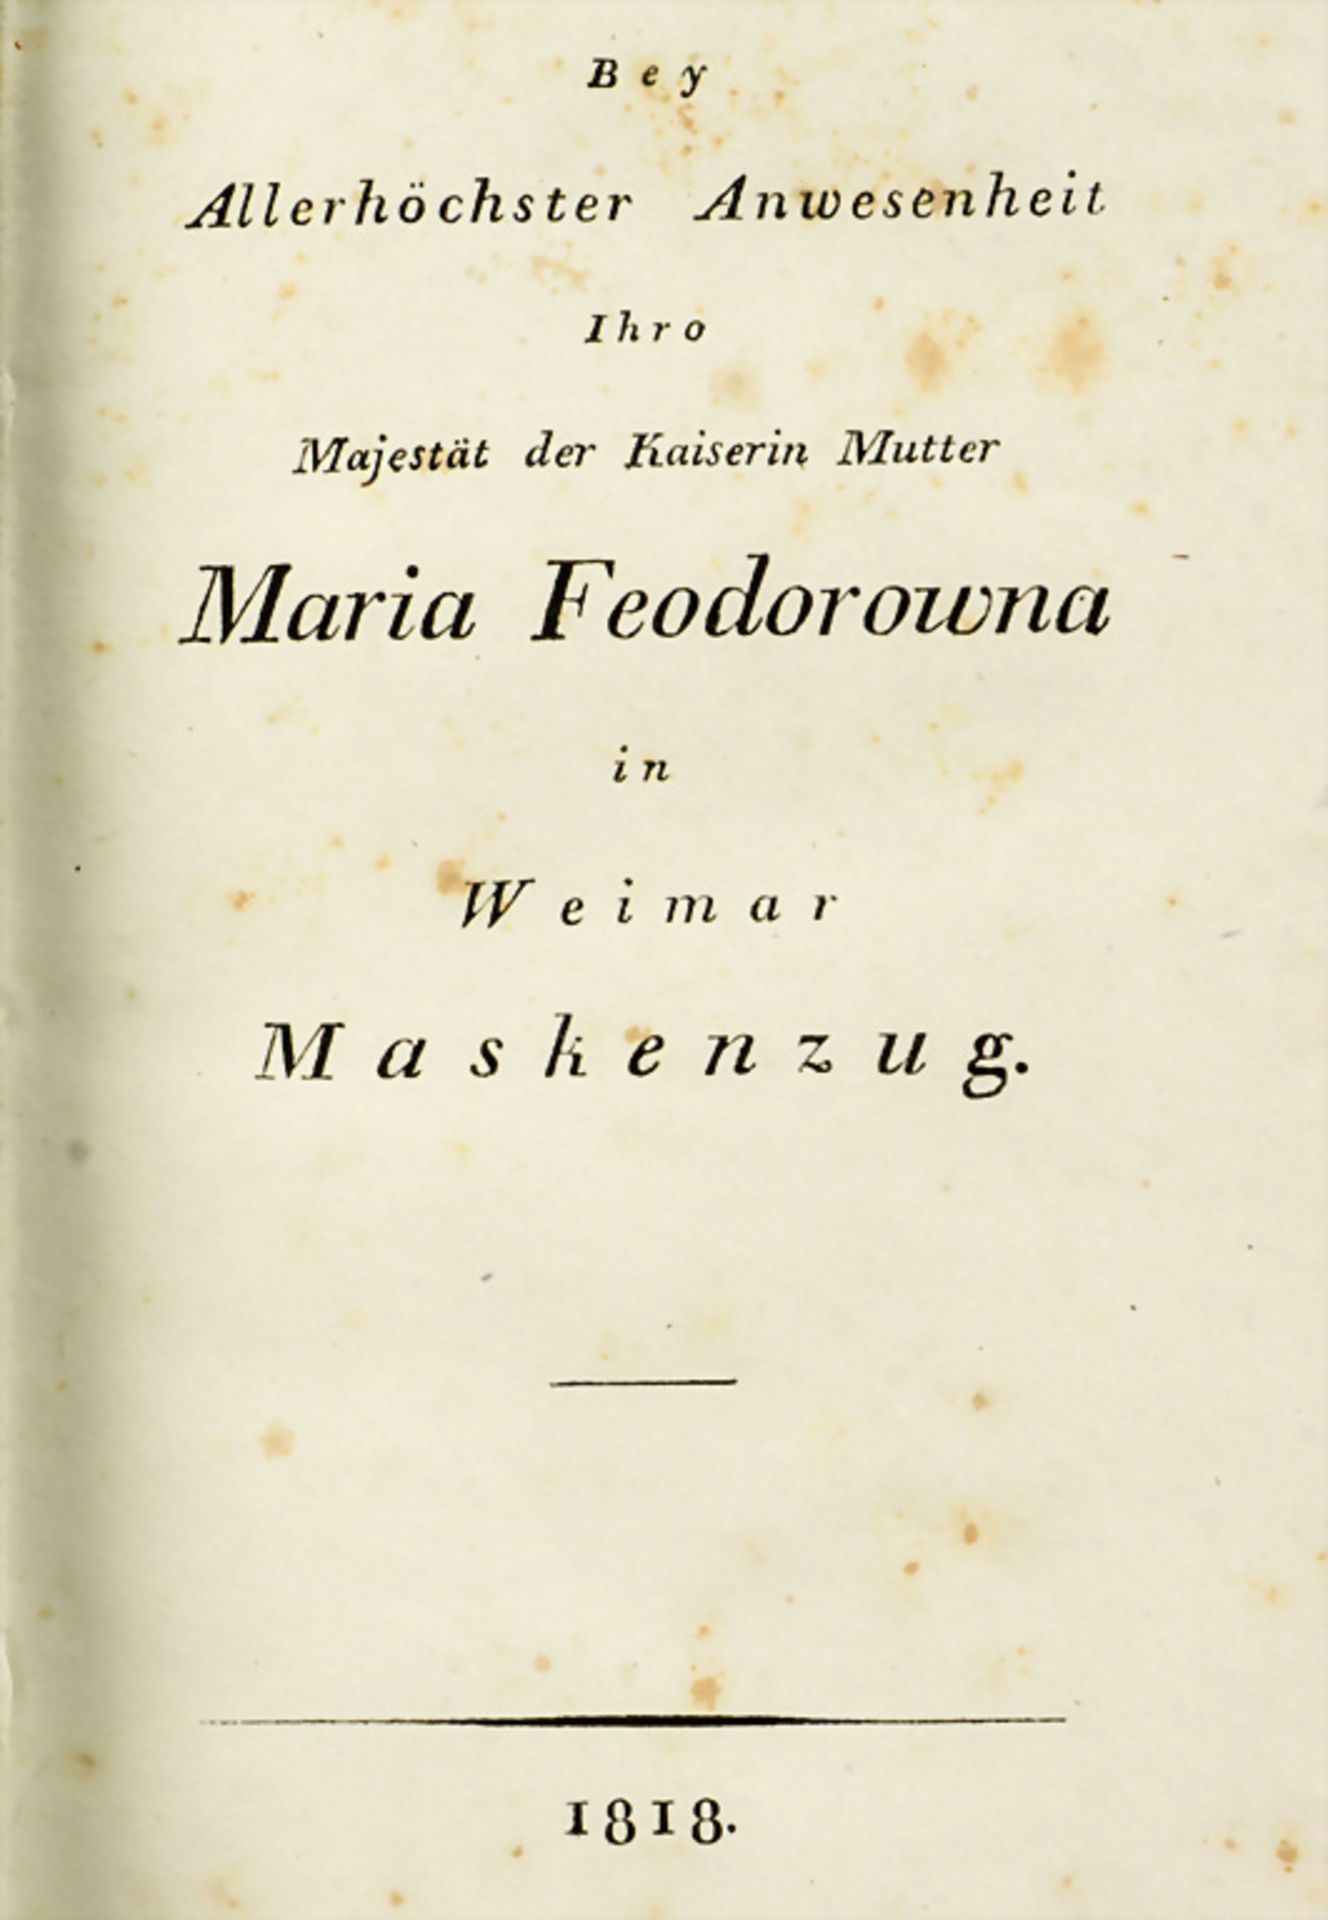 Goethe: 'Weimarer Maskenzug' mit Autograph / with signature